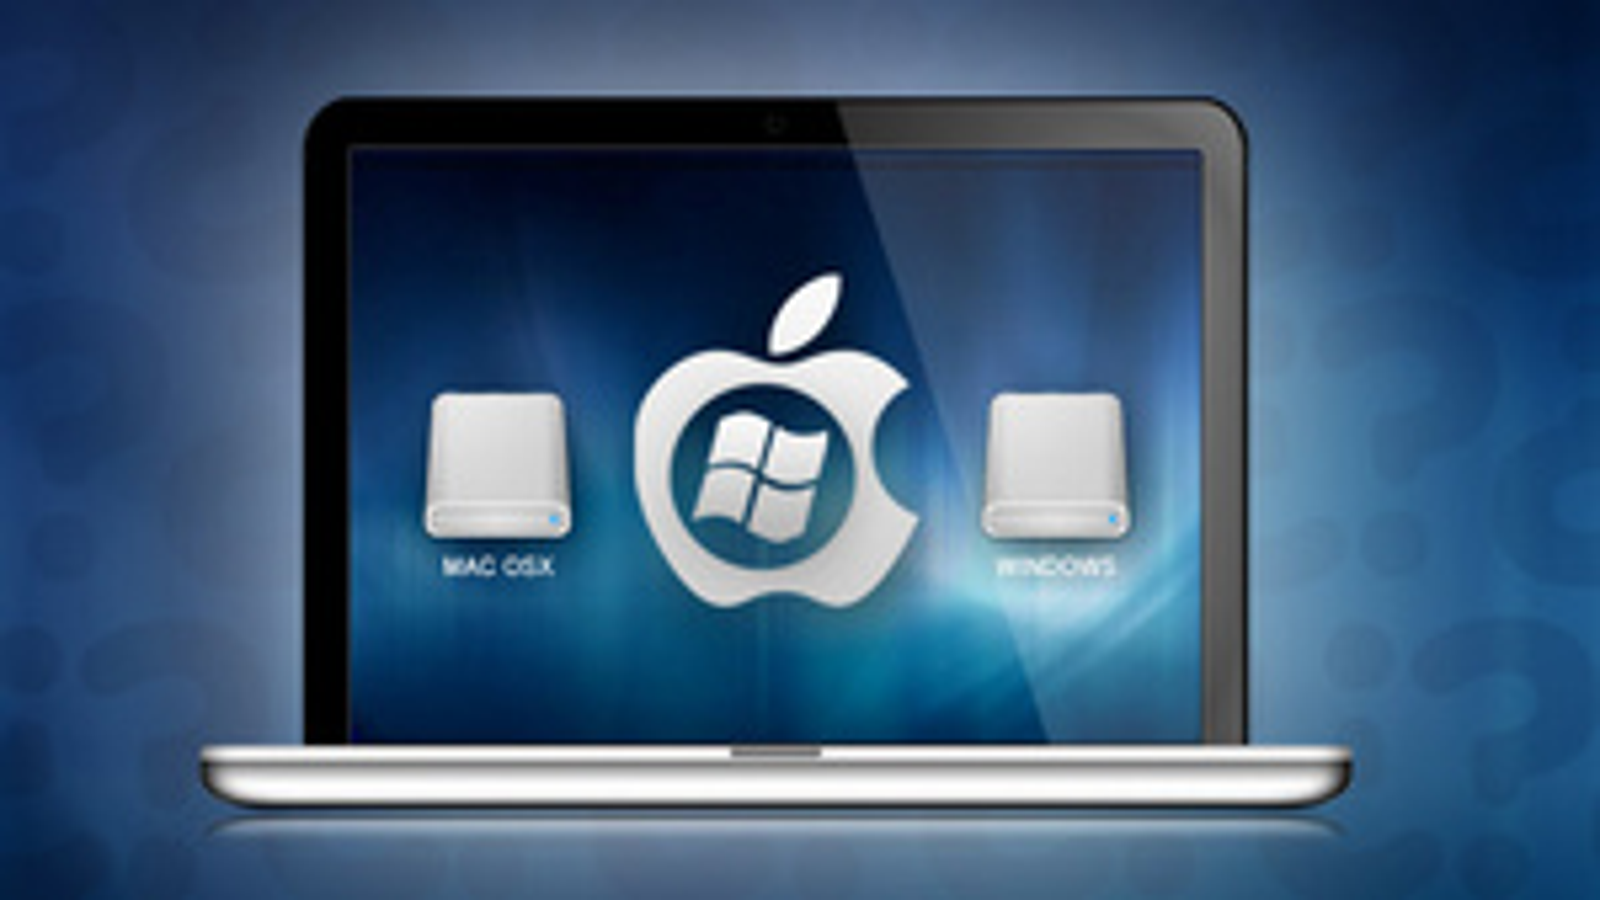 windows 7 virtual machine for mac